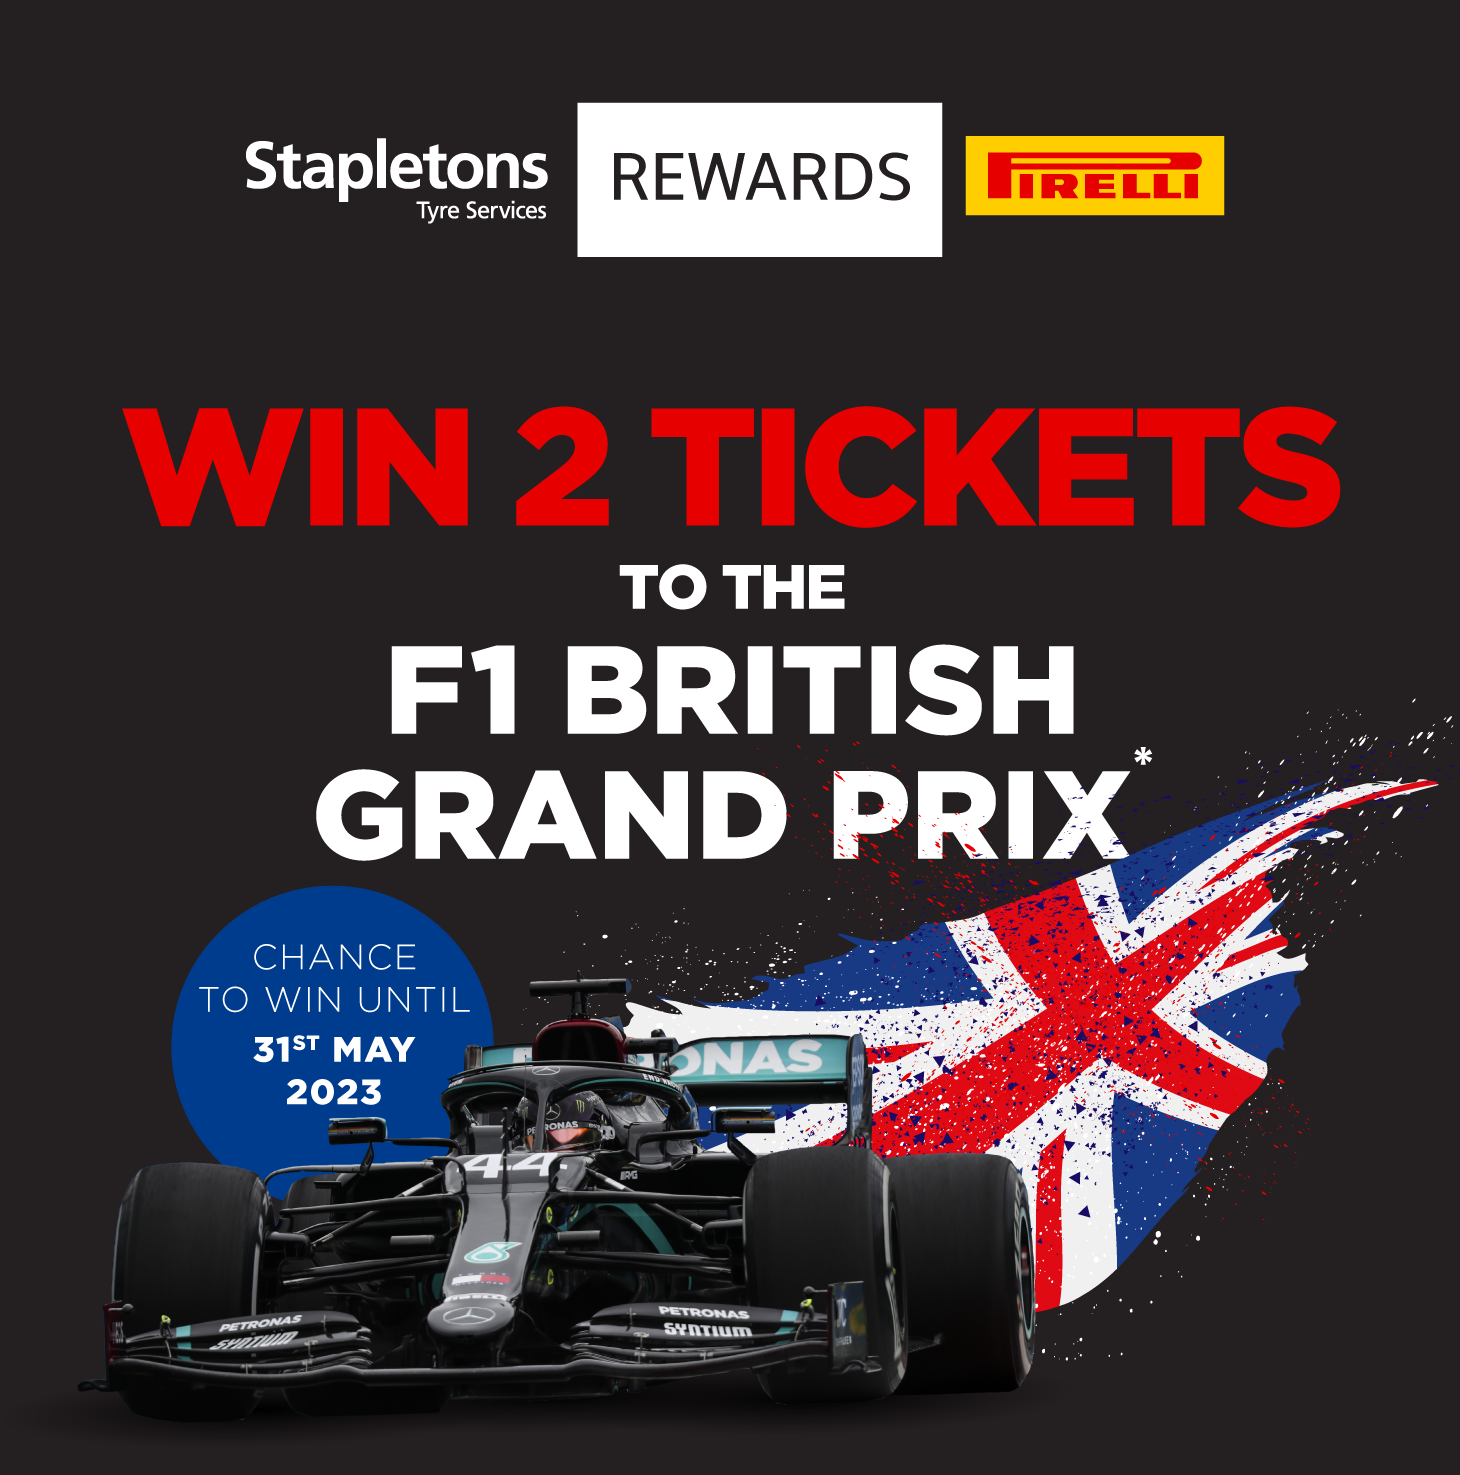 Stapleton's Rewards | Pirelli | WIN 2 TICKETS TO THE F1 BRITISH GRAND PRIX | Chance to win until 31st May 2023